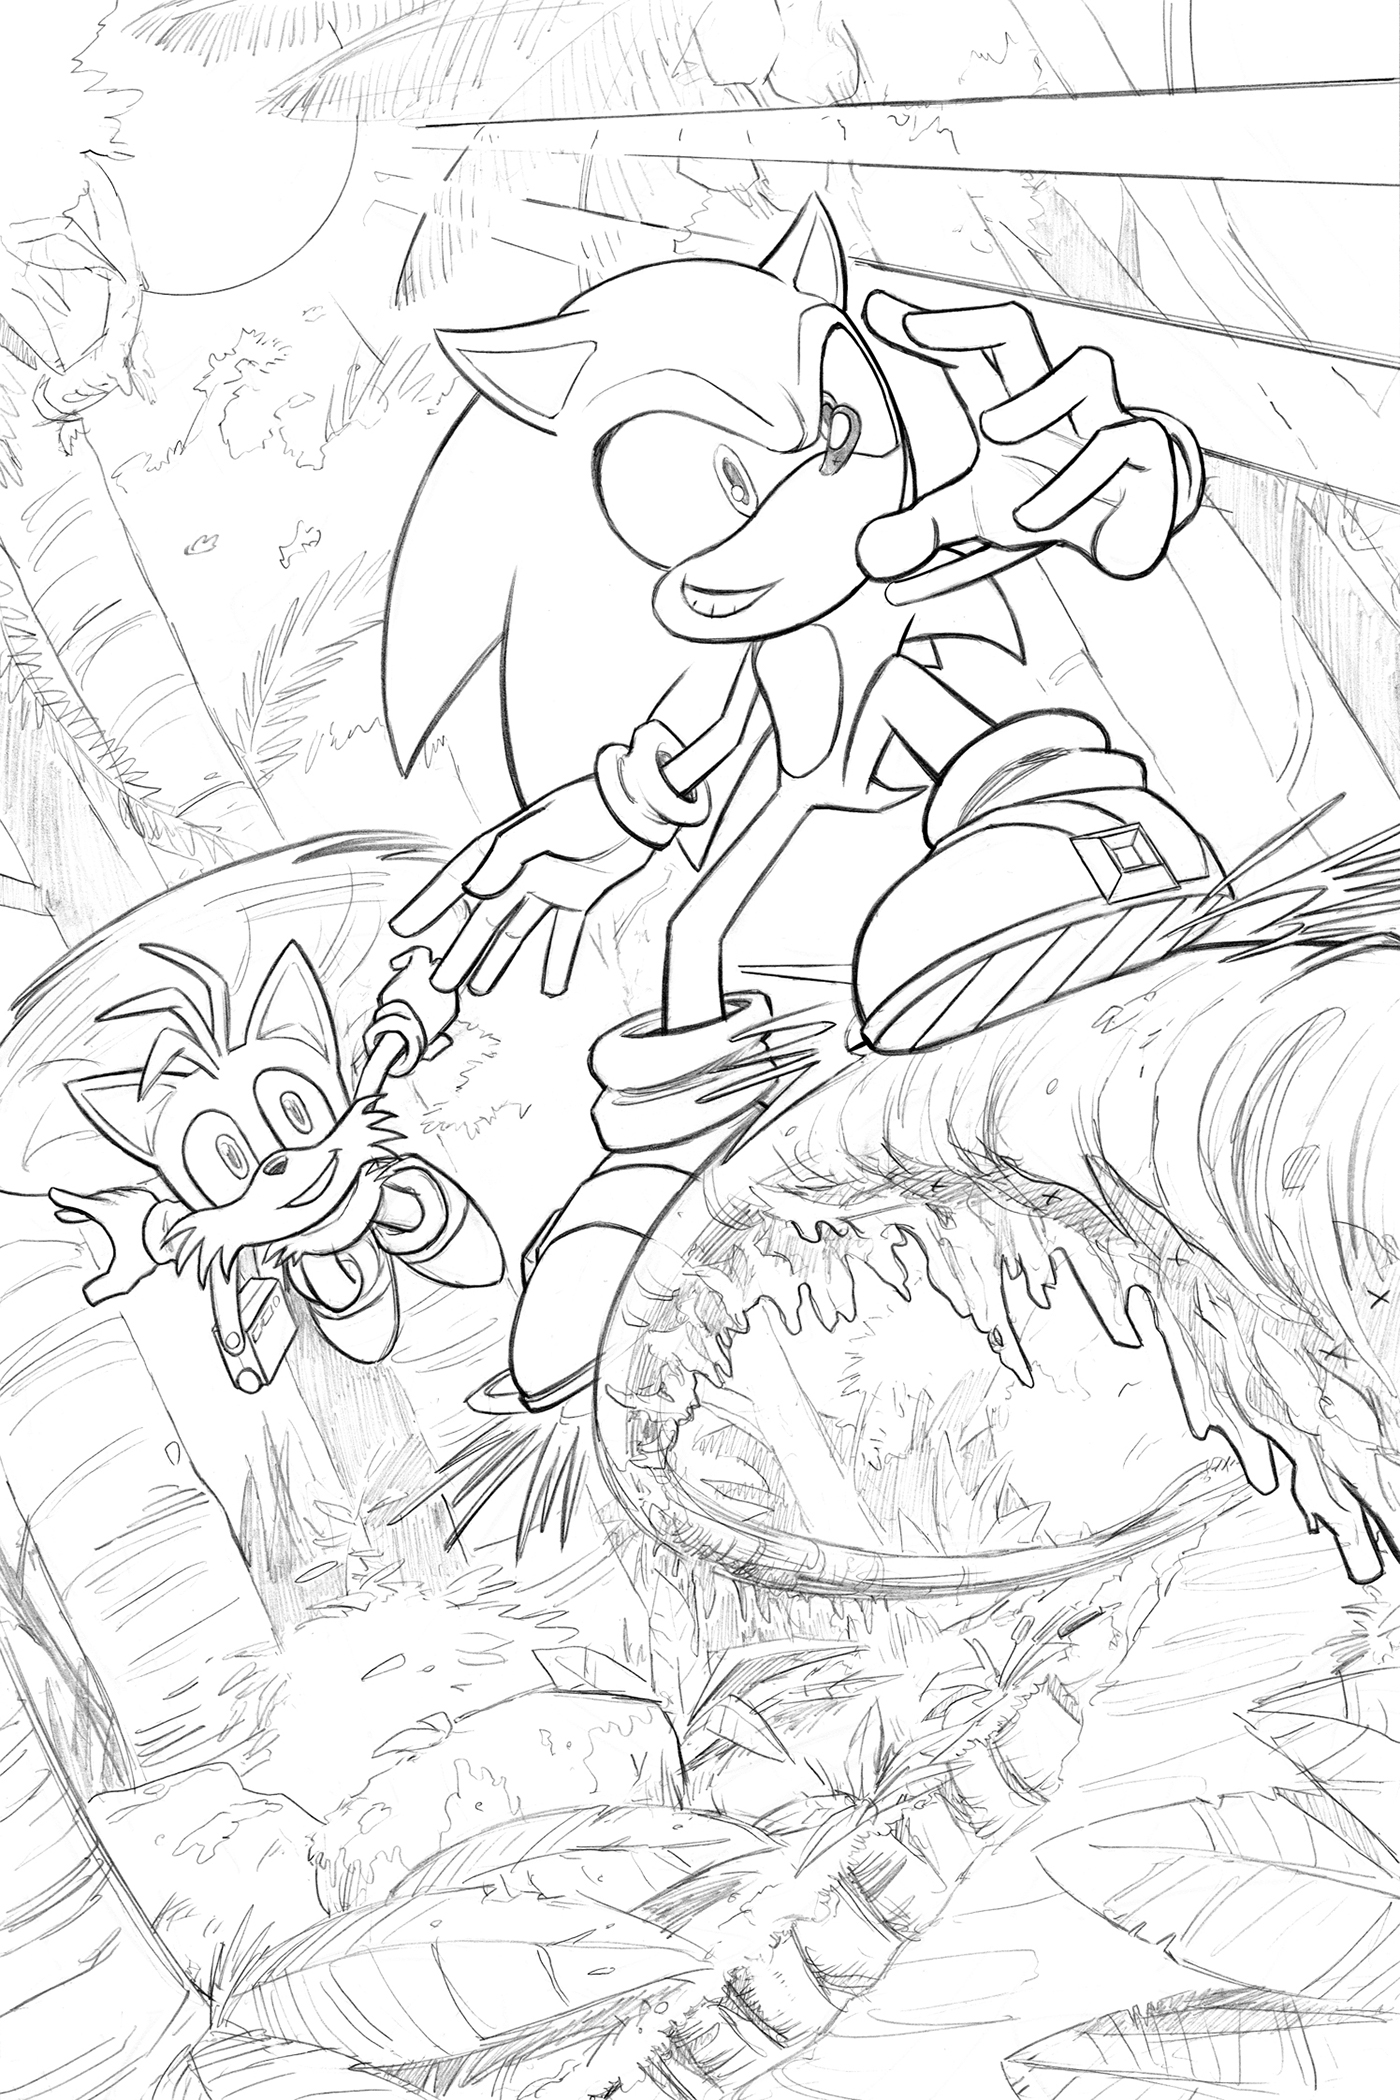 Sonic the Hedgehog sonic comics cartoon comic SEGA Archie Comics sample pages pencils inks Planet Mobius Princess Sally Knuckles Tails robotnik